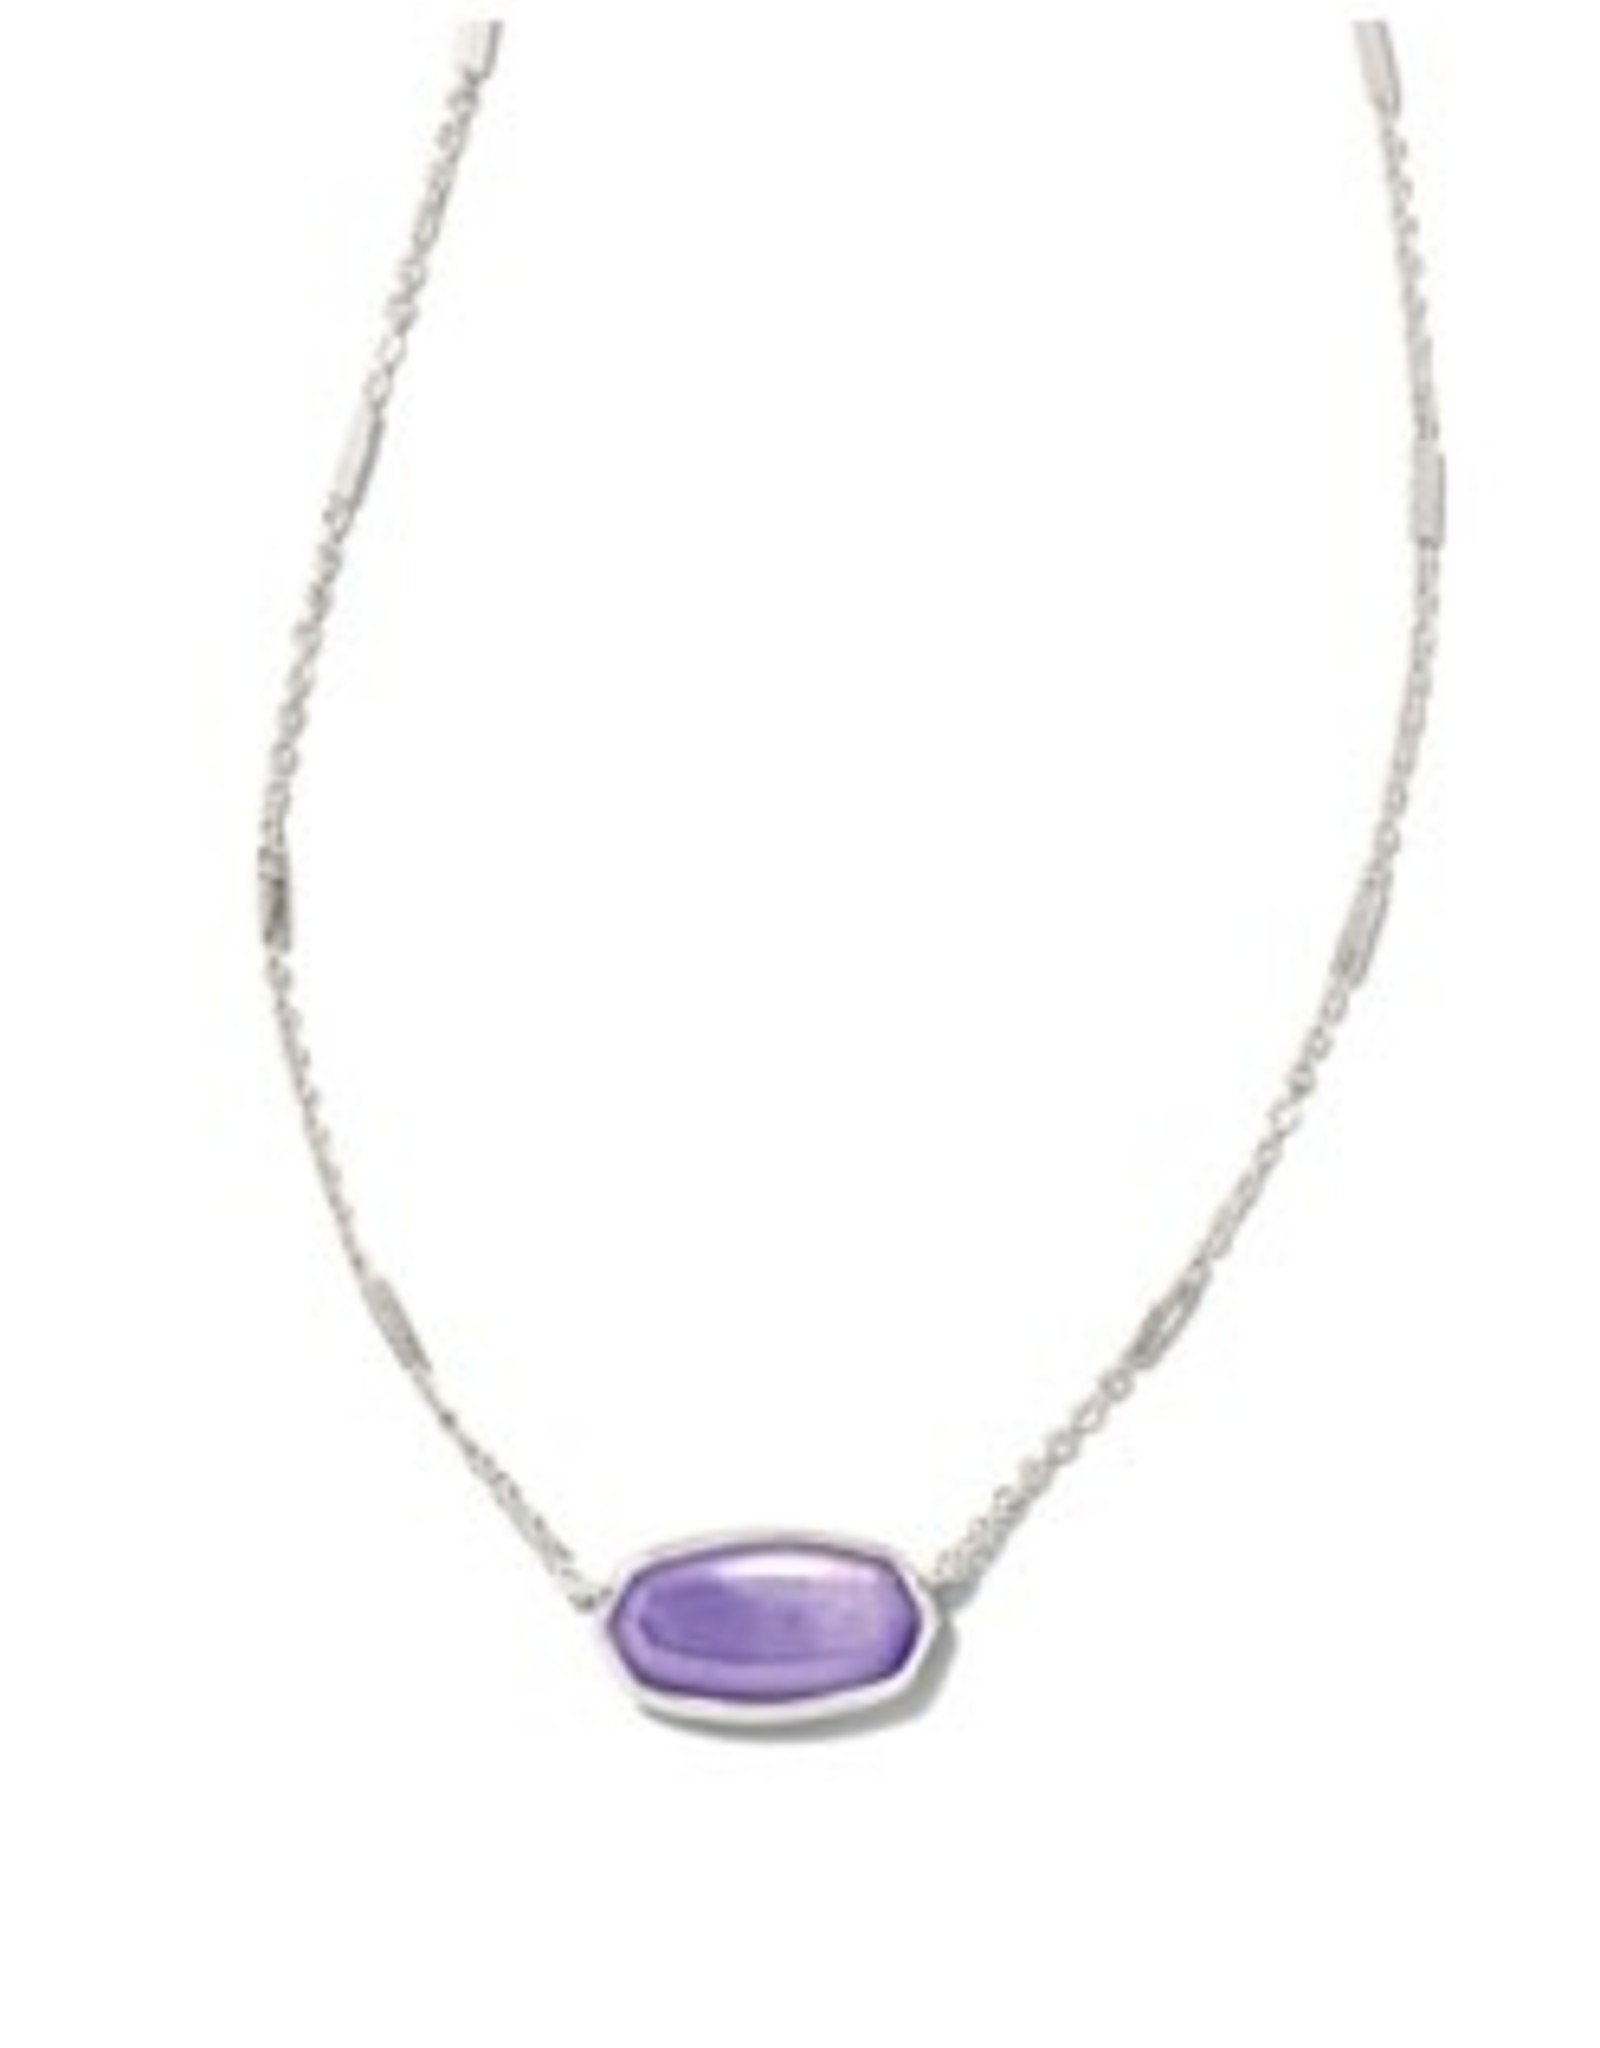 Kendra Scott Framed Elisa Short Necklace Rhodium/Lavender Opalite Illusion